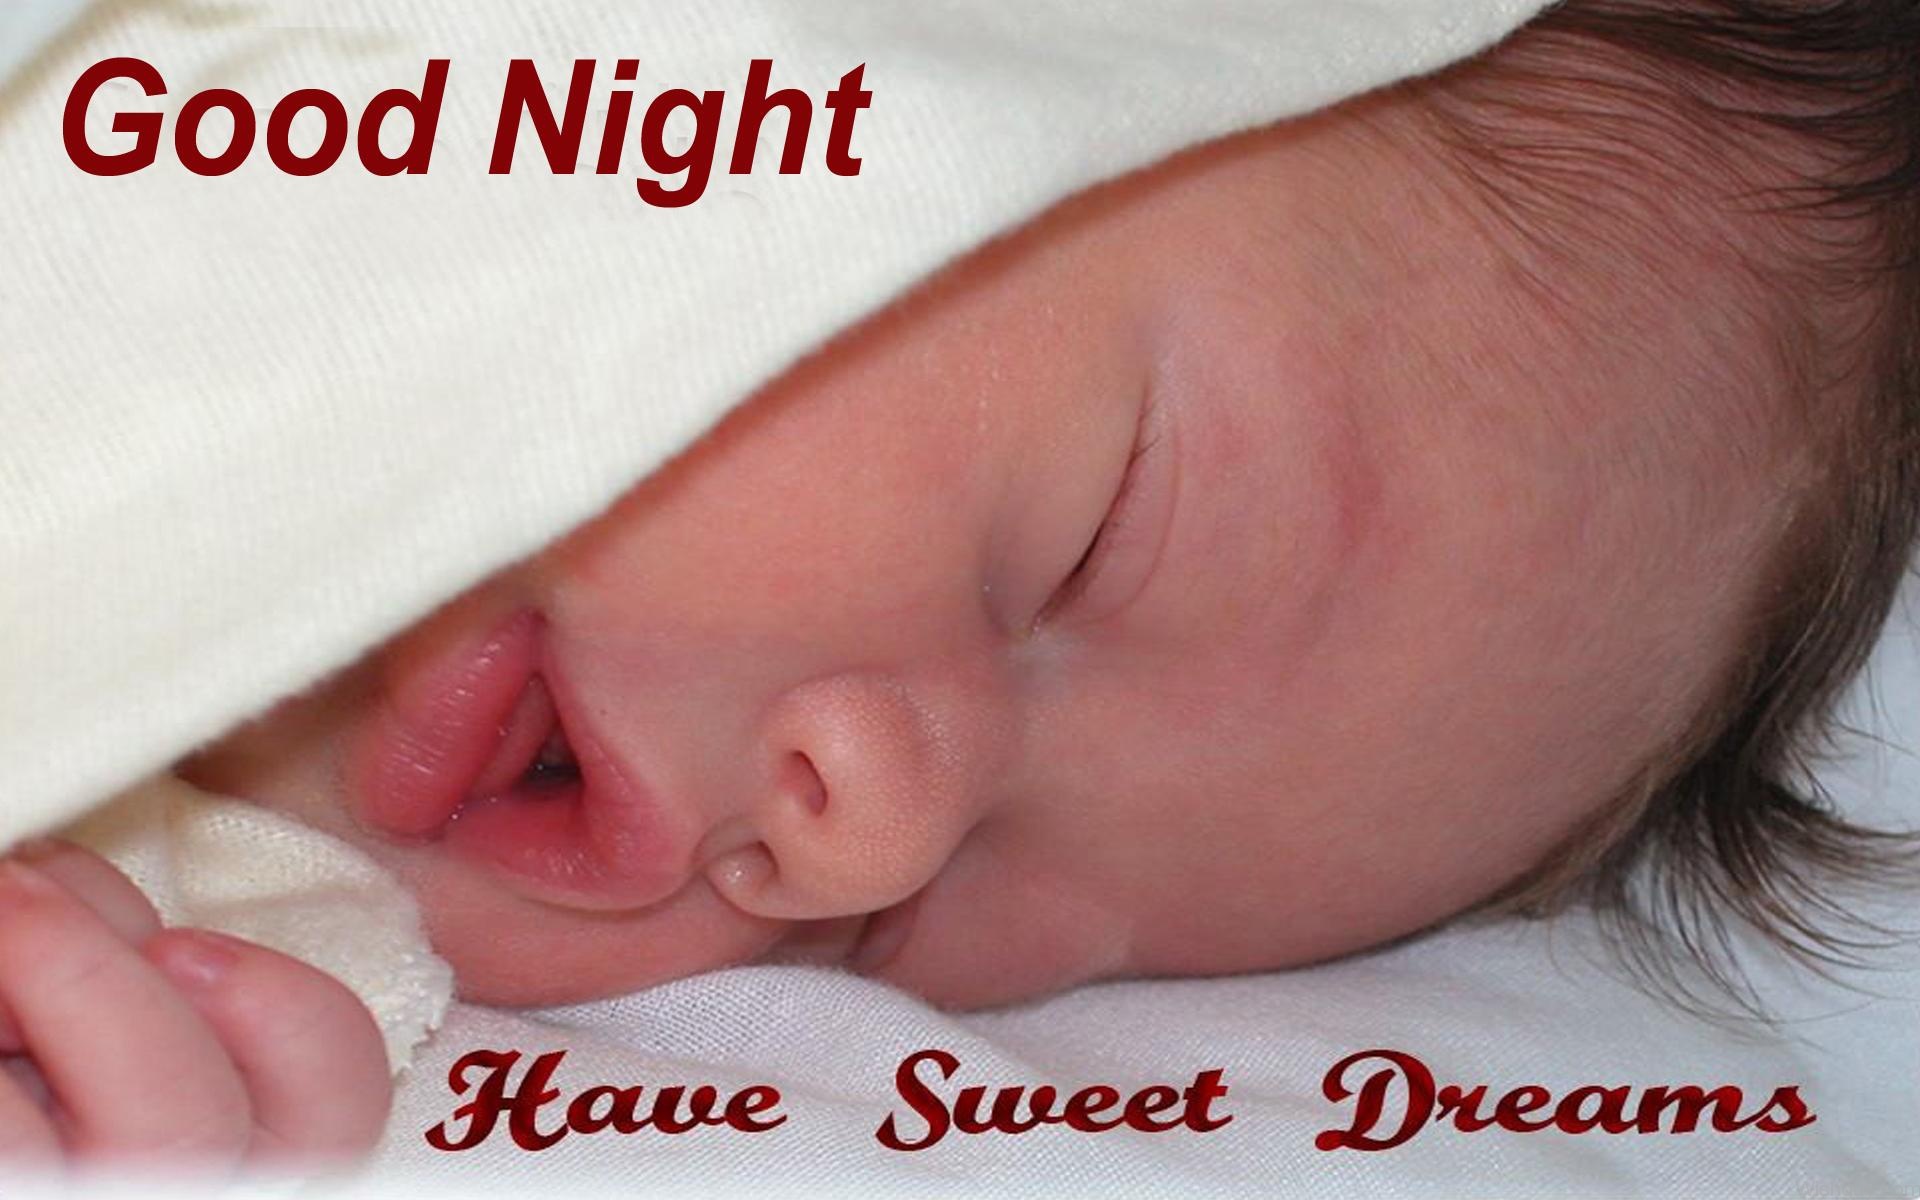 Good Night Have Sweet Dreams.